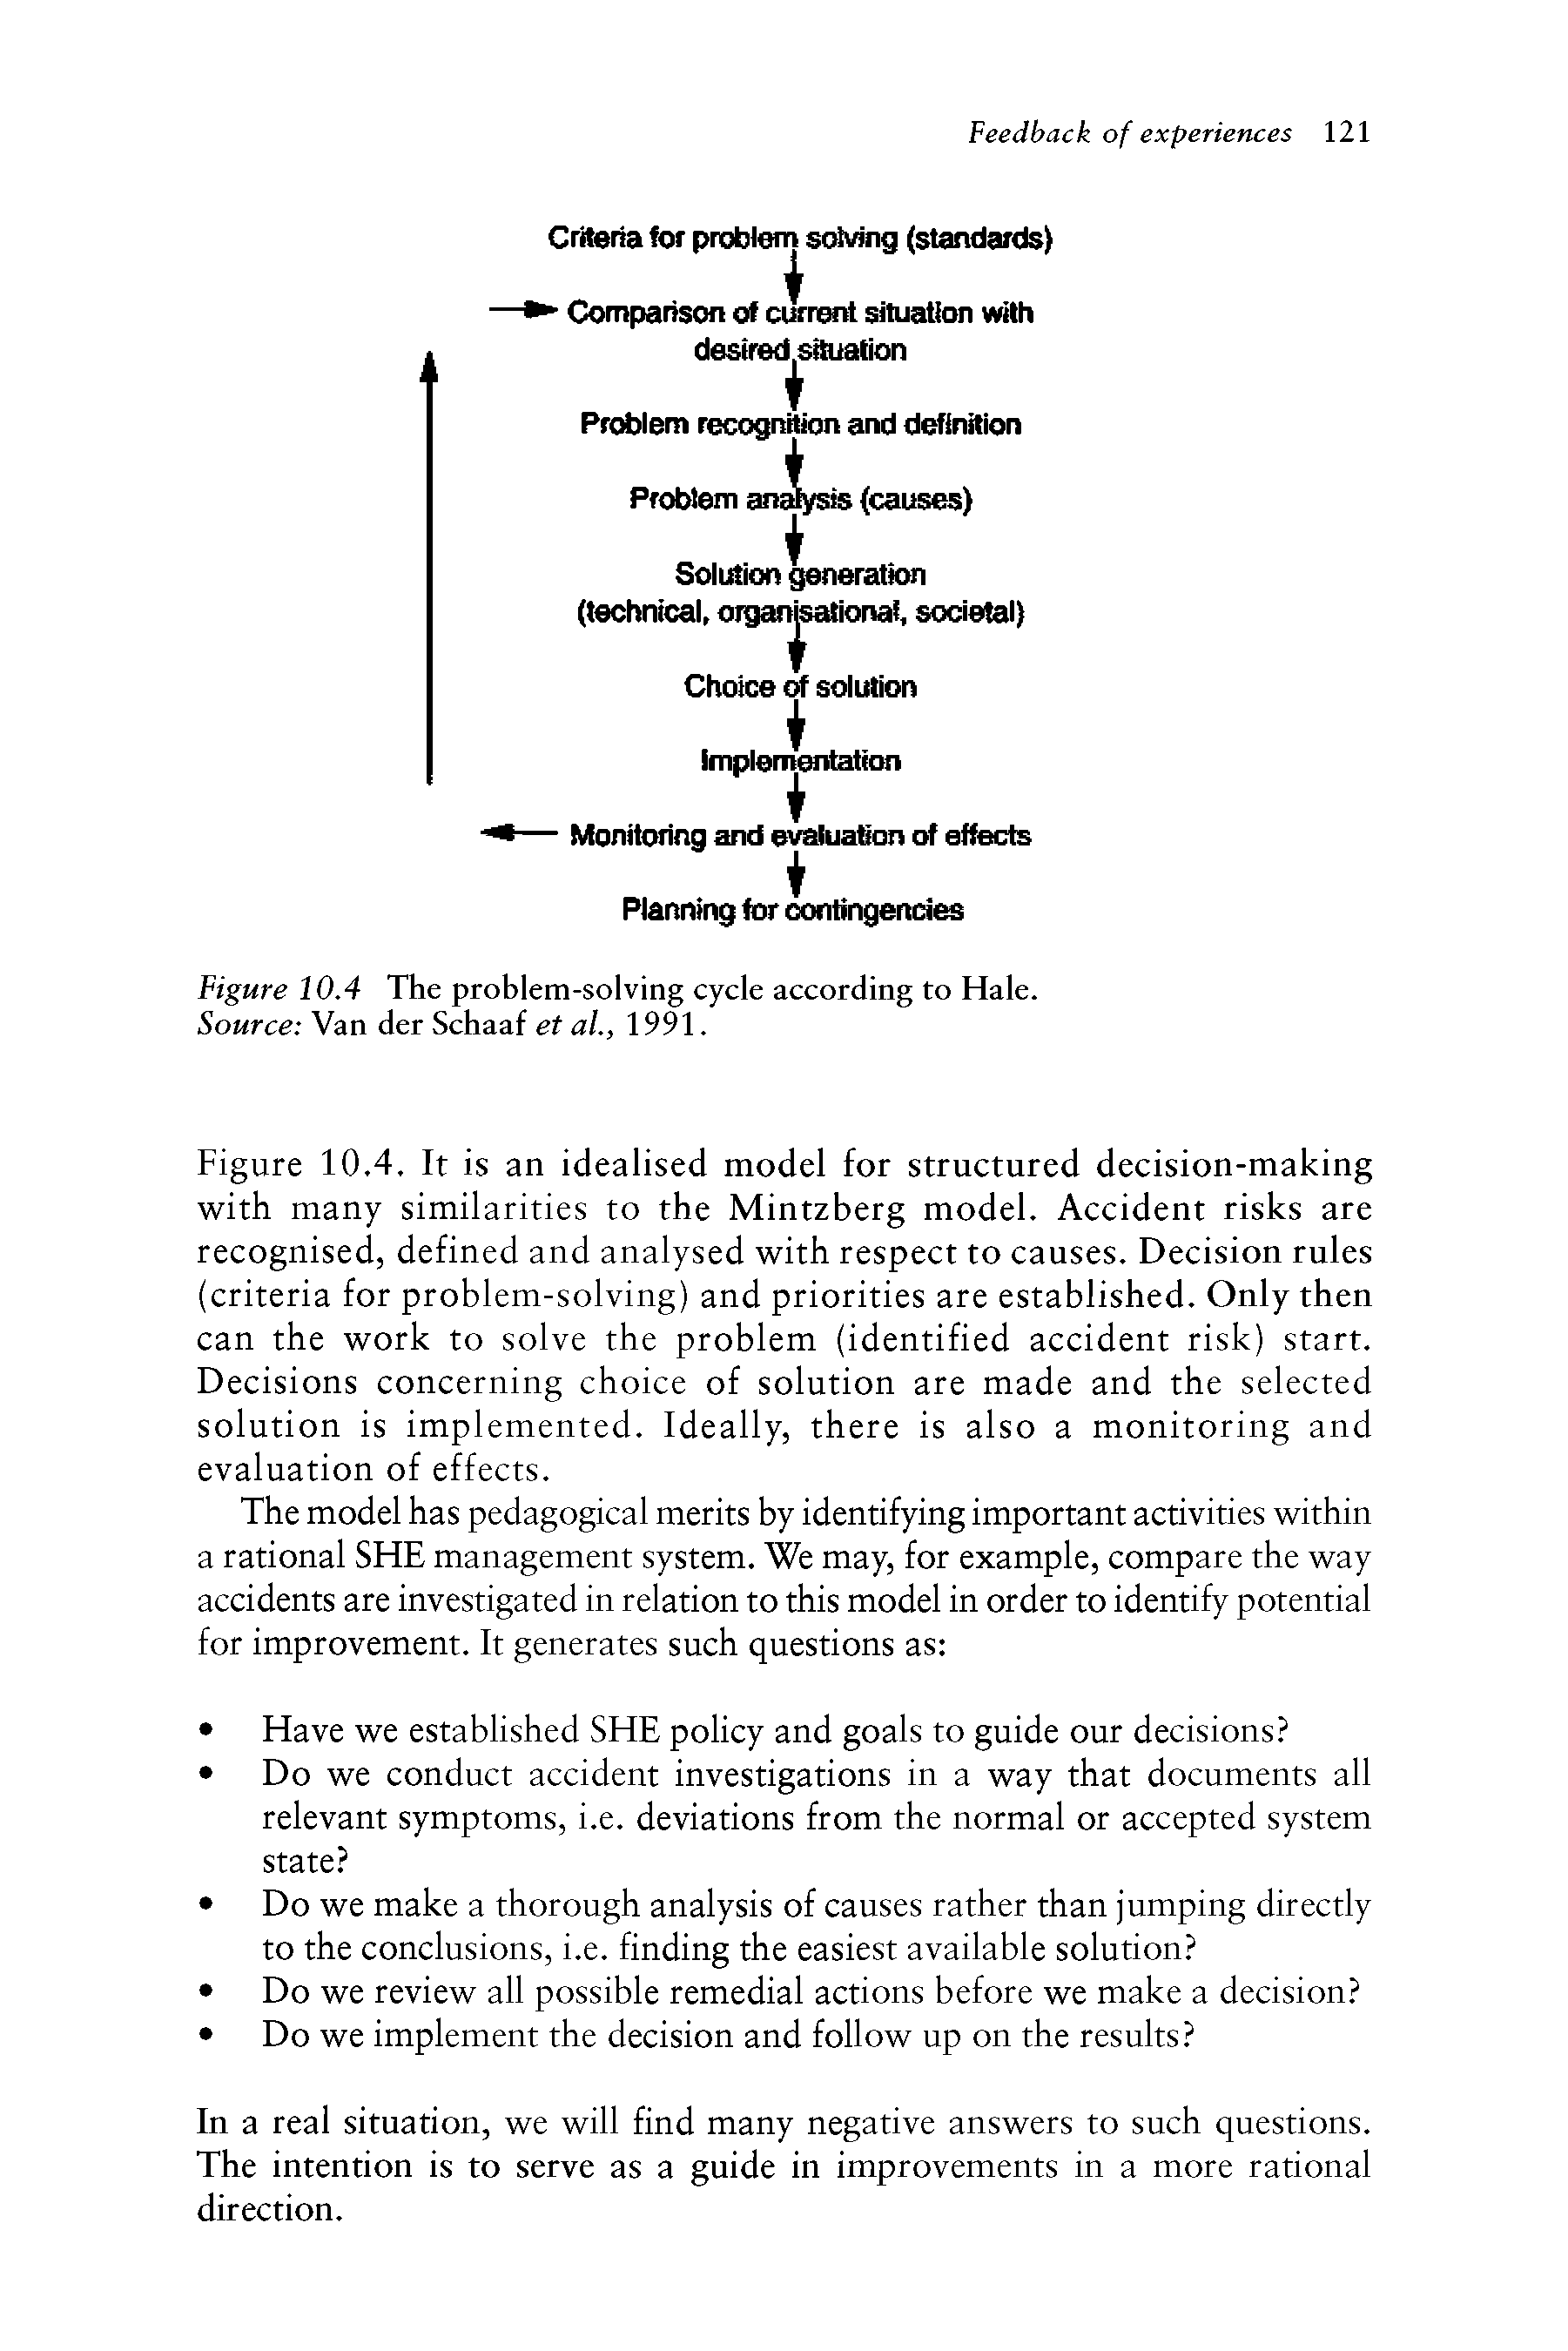 Figure 10.4 The problem-solving cycle according to Hale. Source Van der Schaaf et al., 1991.